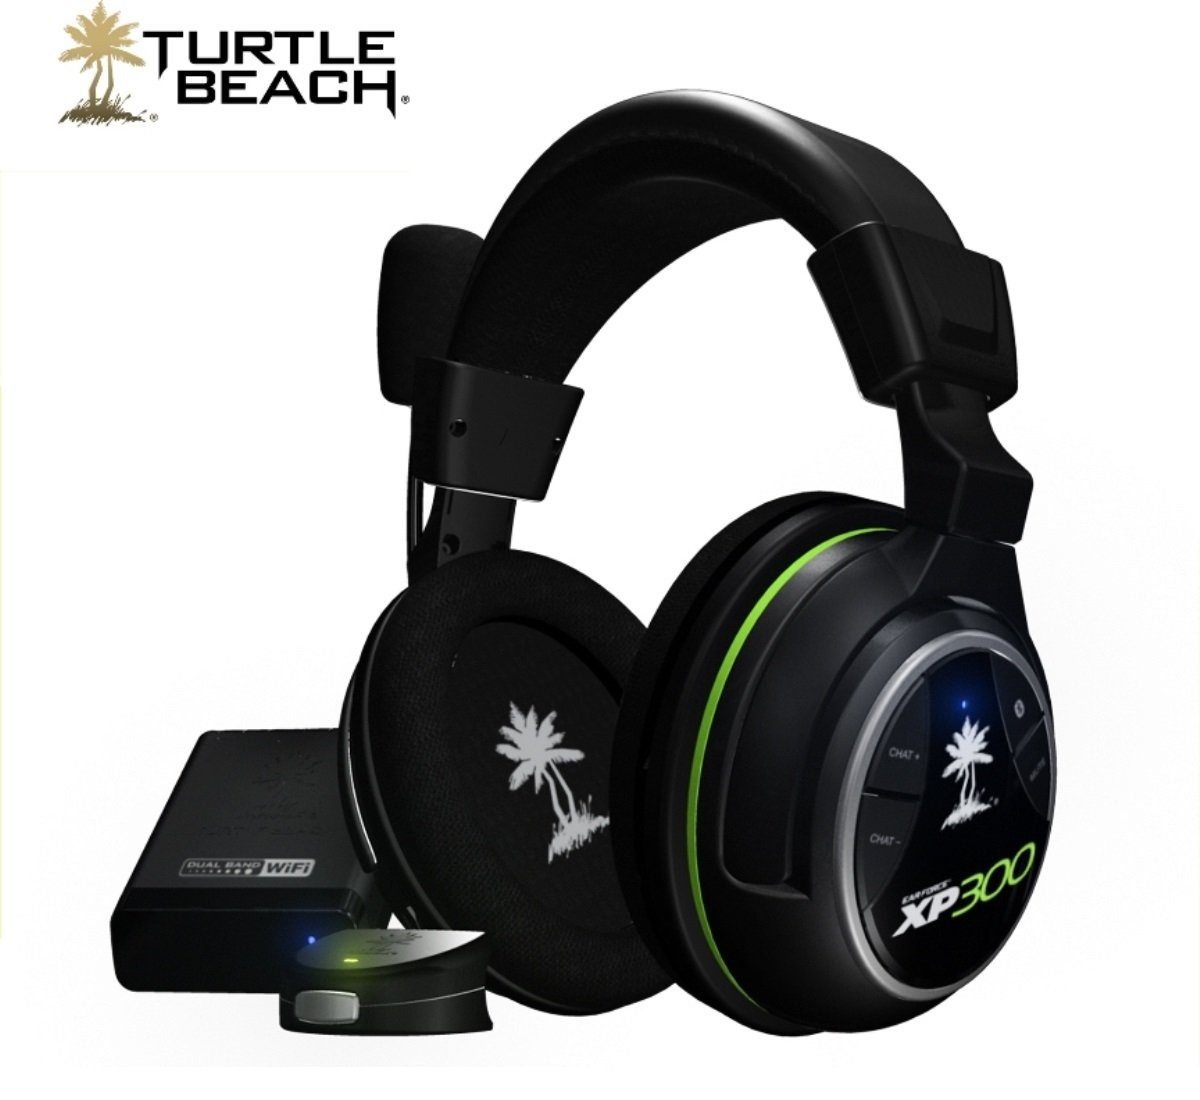 Turtle Beach Beach XP300 Gaming Headset Bluetooth Навушники Headset (schwenkbare Ohrmuscheln, Bluetooth, für XBOX 360 ONE PS3 PS4)